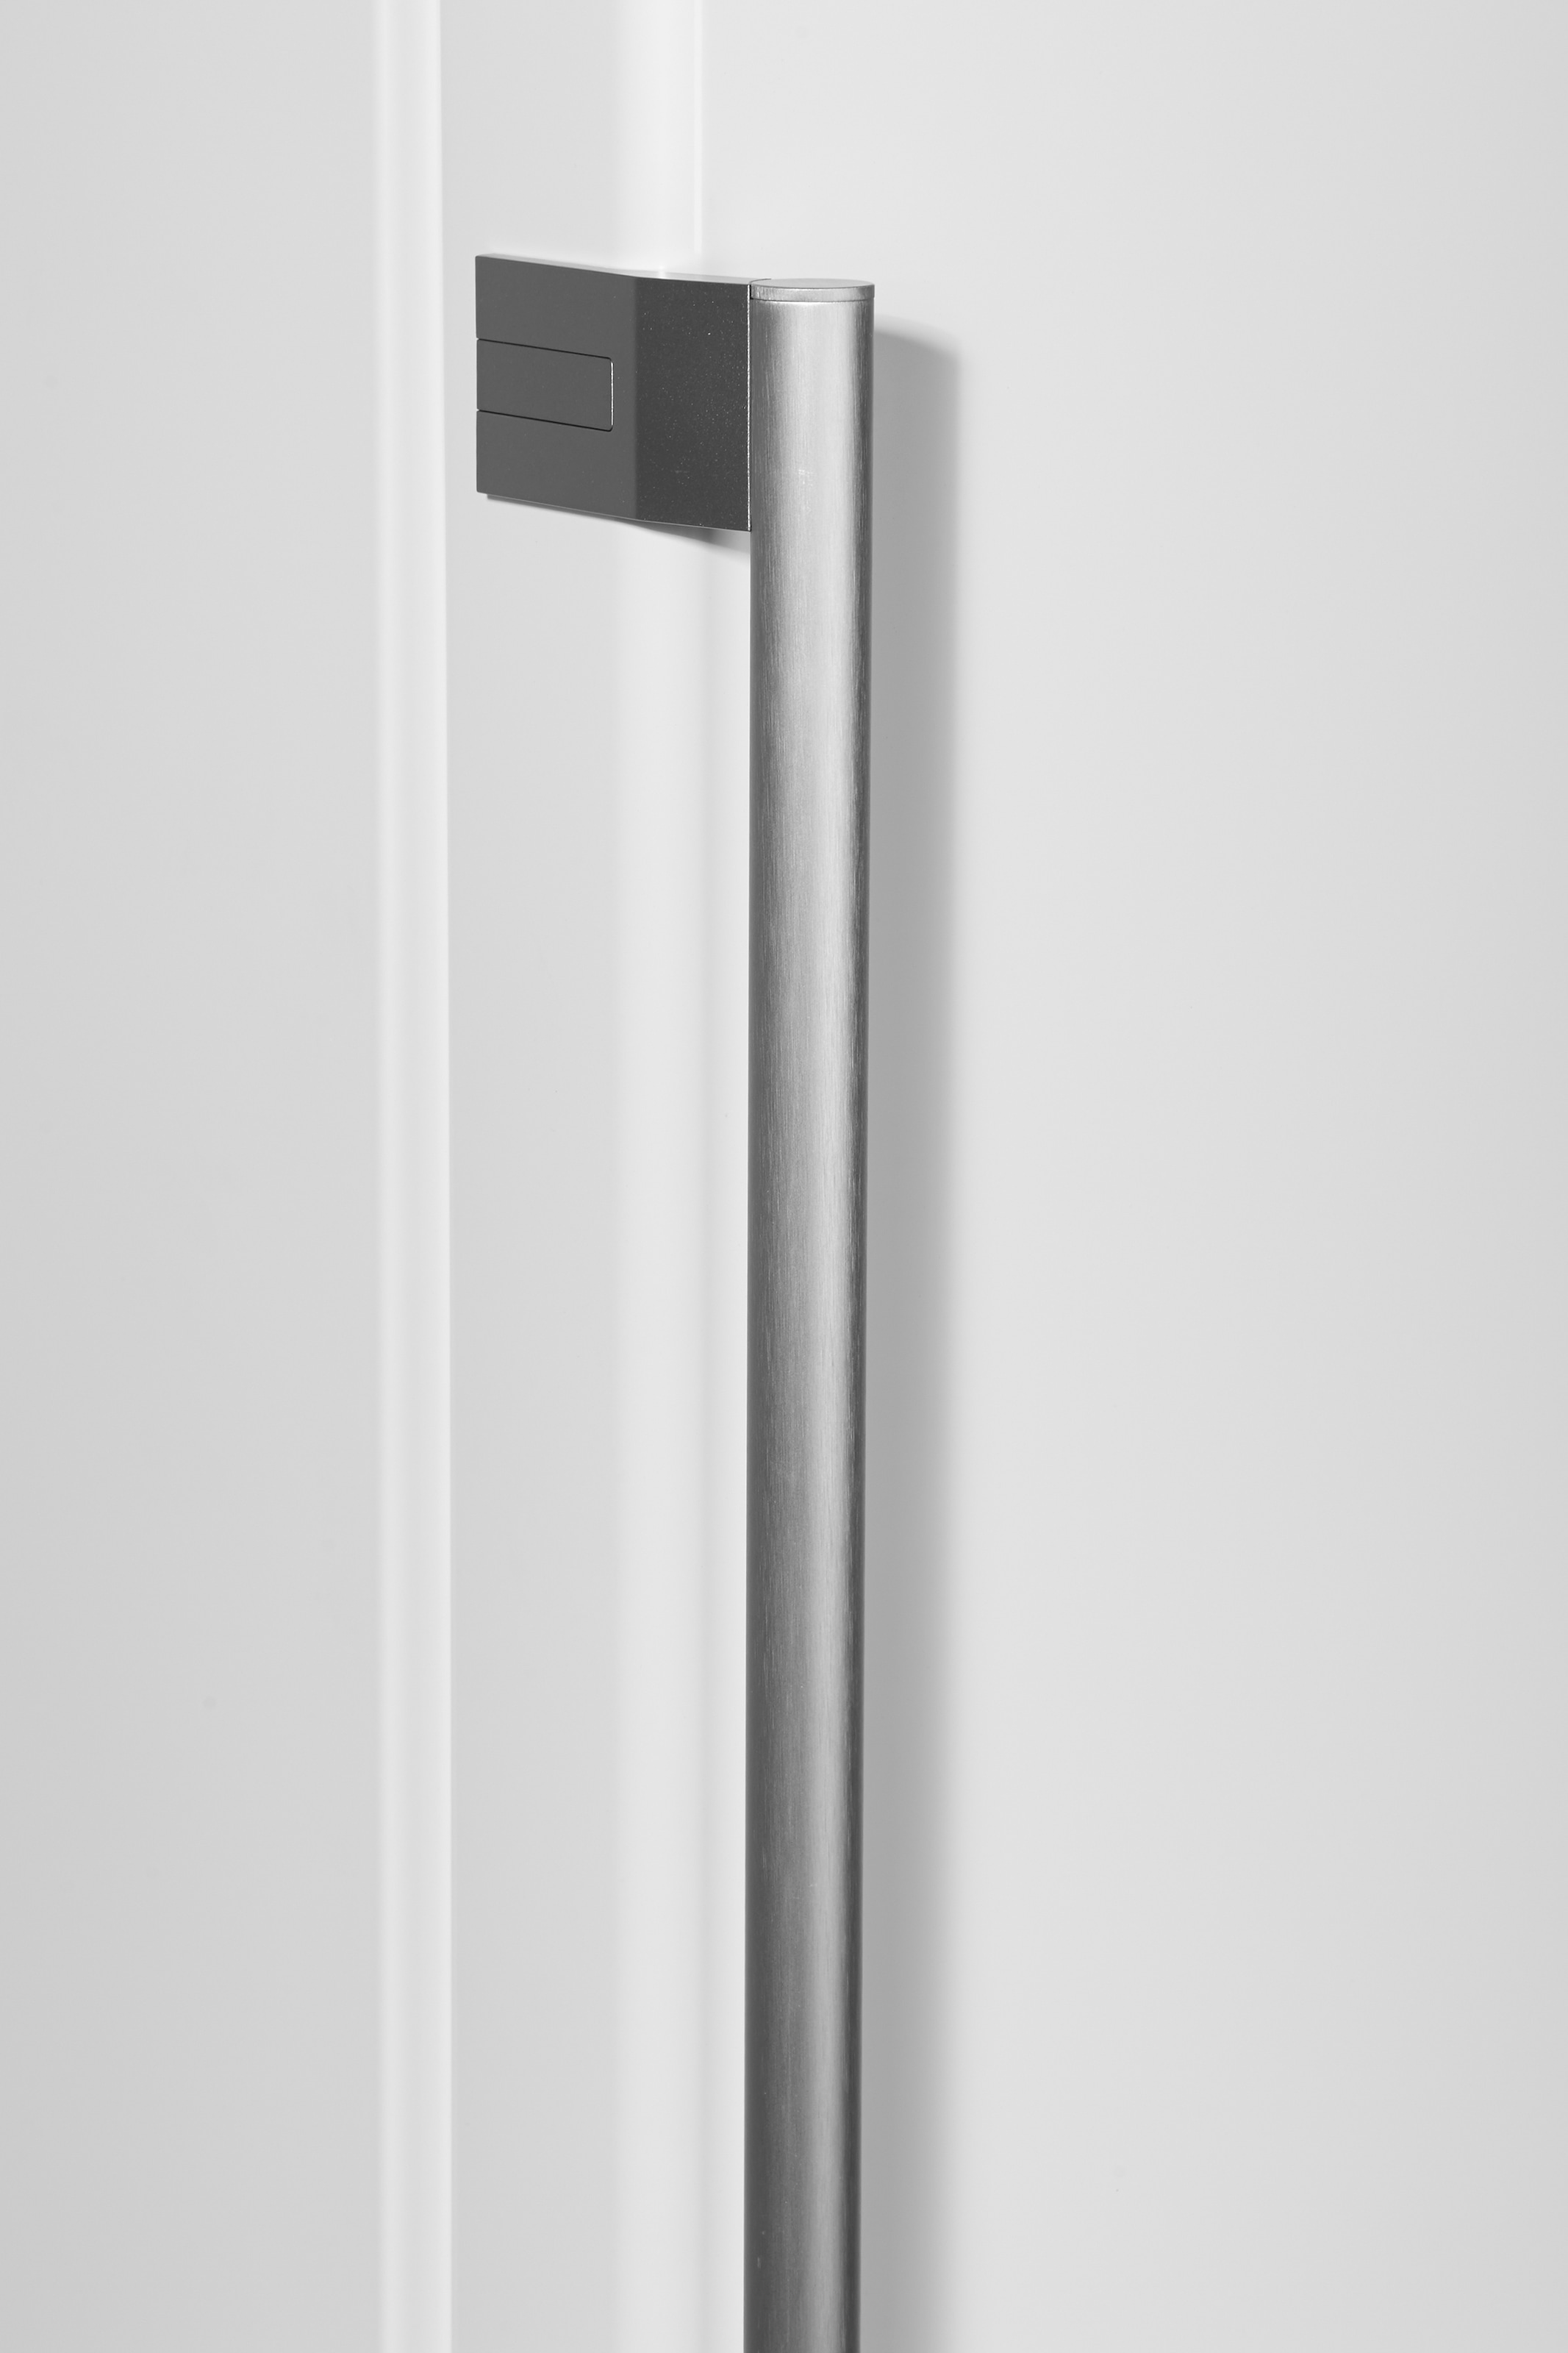 BAUKNECHT Gefrierschrank »GKN 272 A3+«, 175,0 cm hoch, 71,0 cm breit